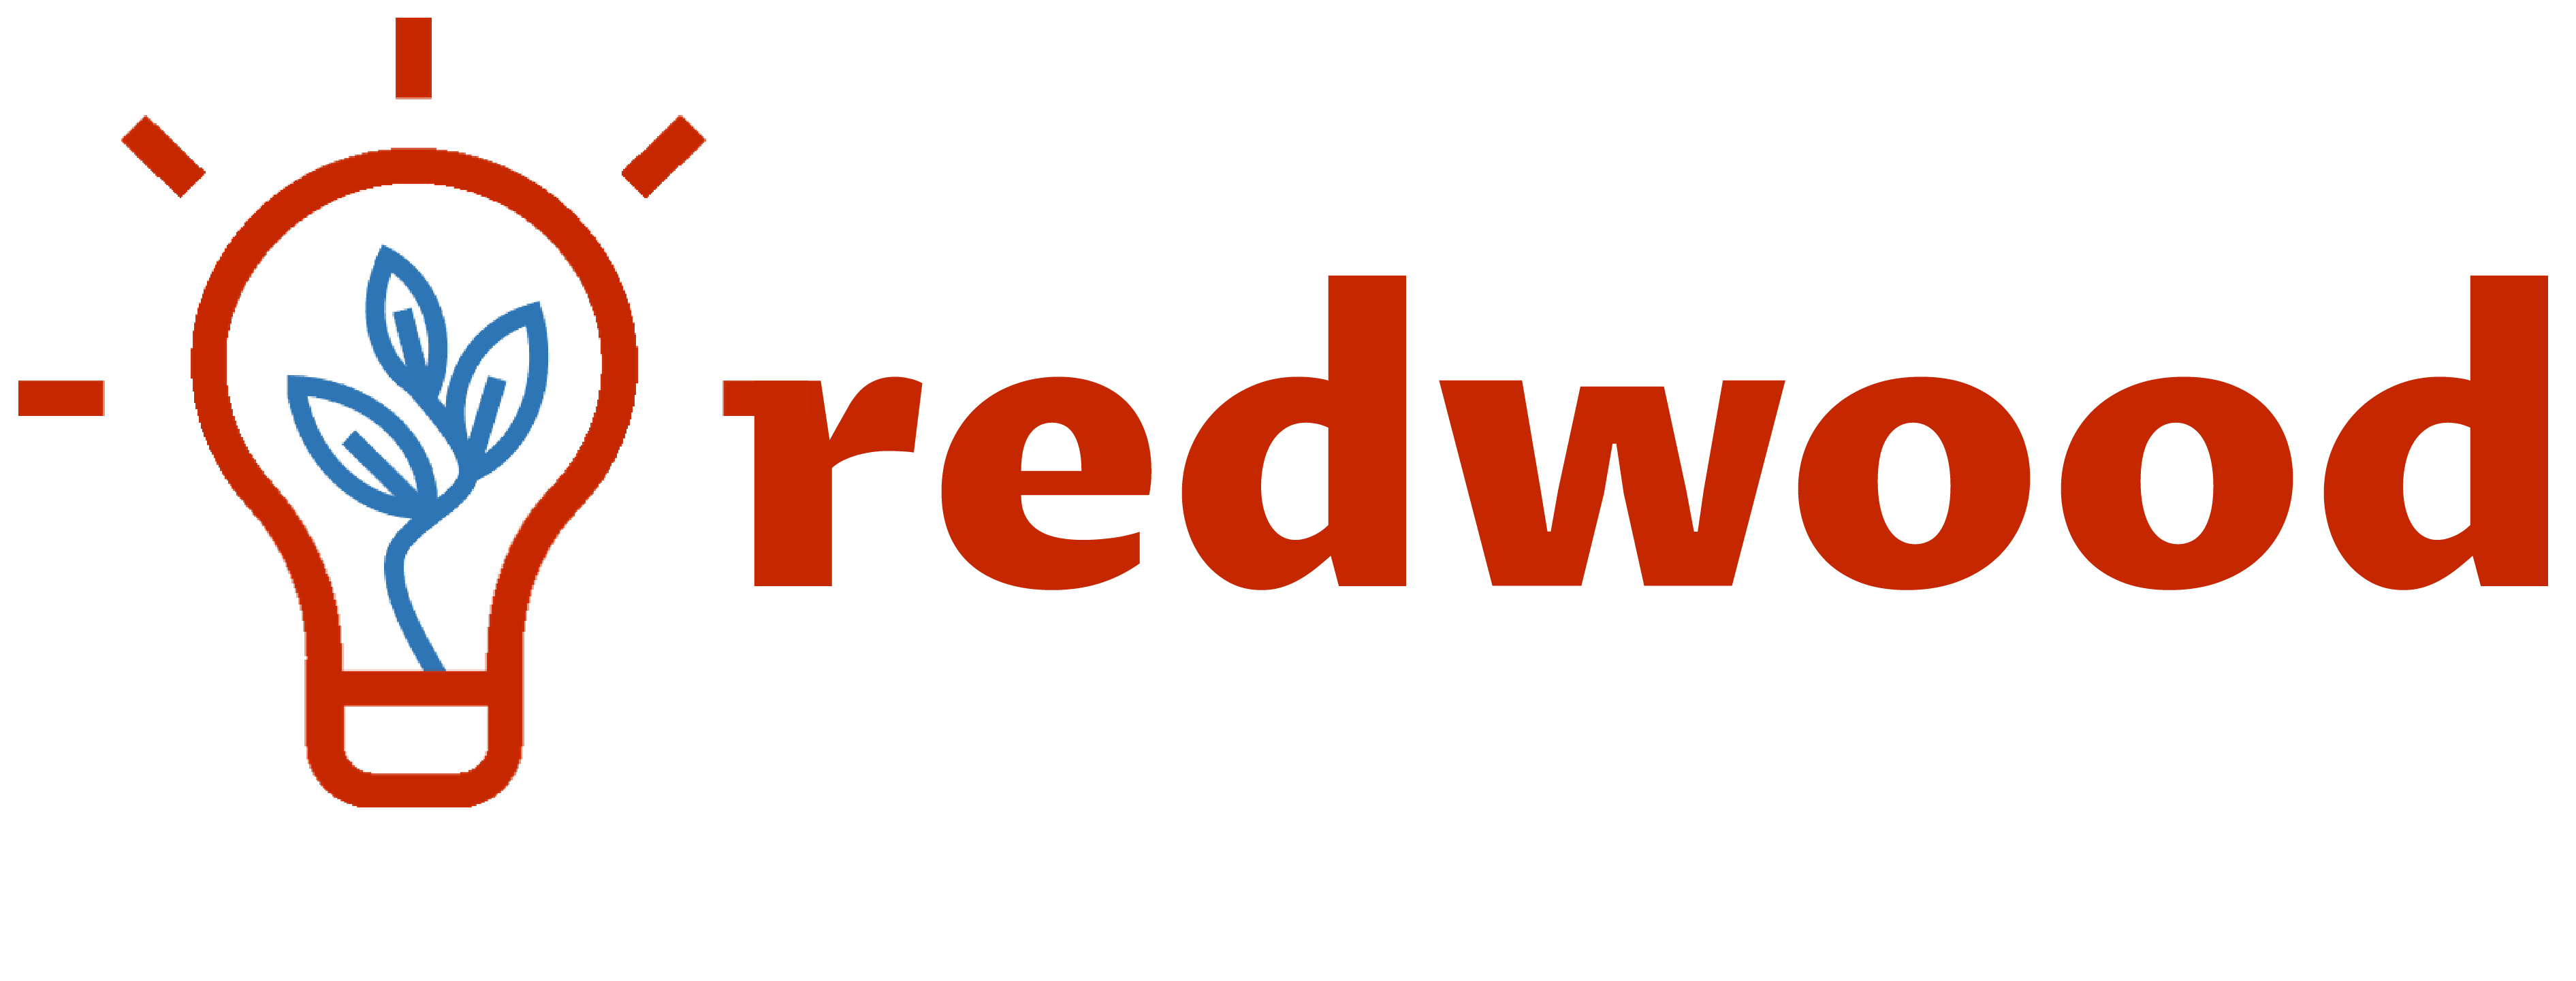 Redwood Logo